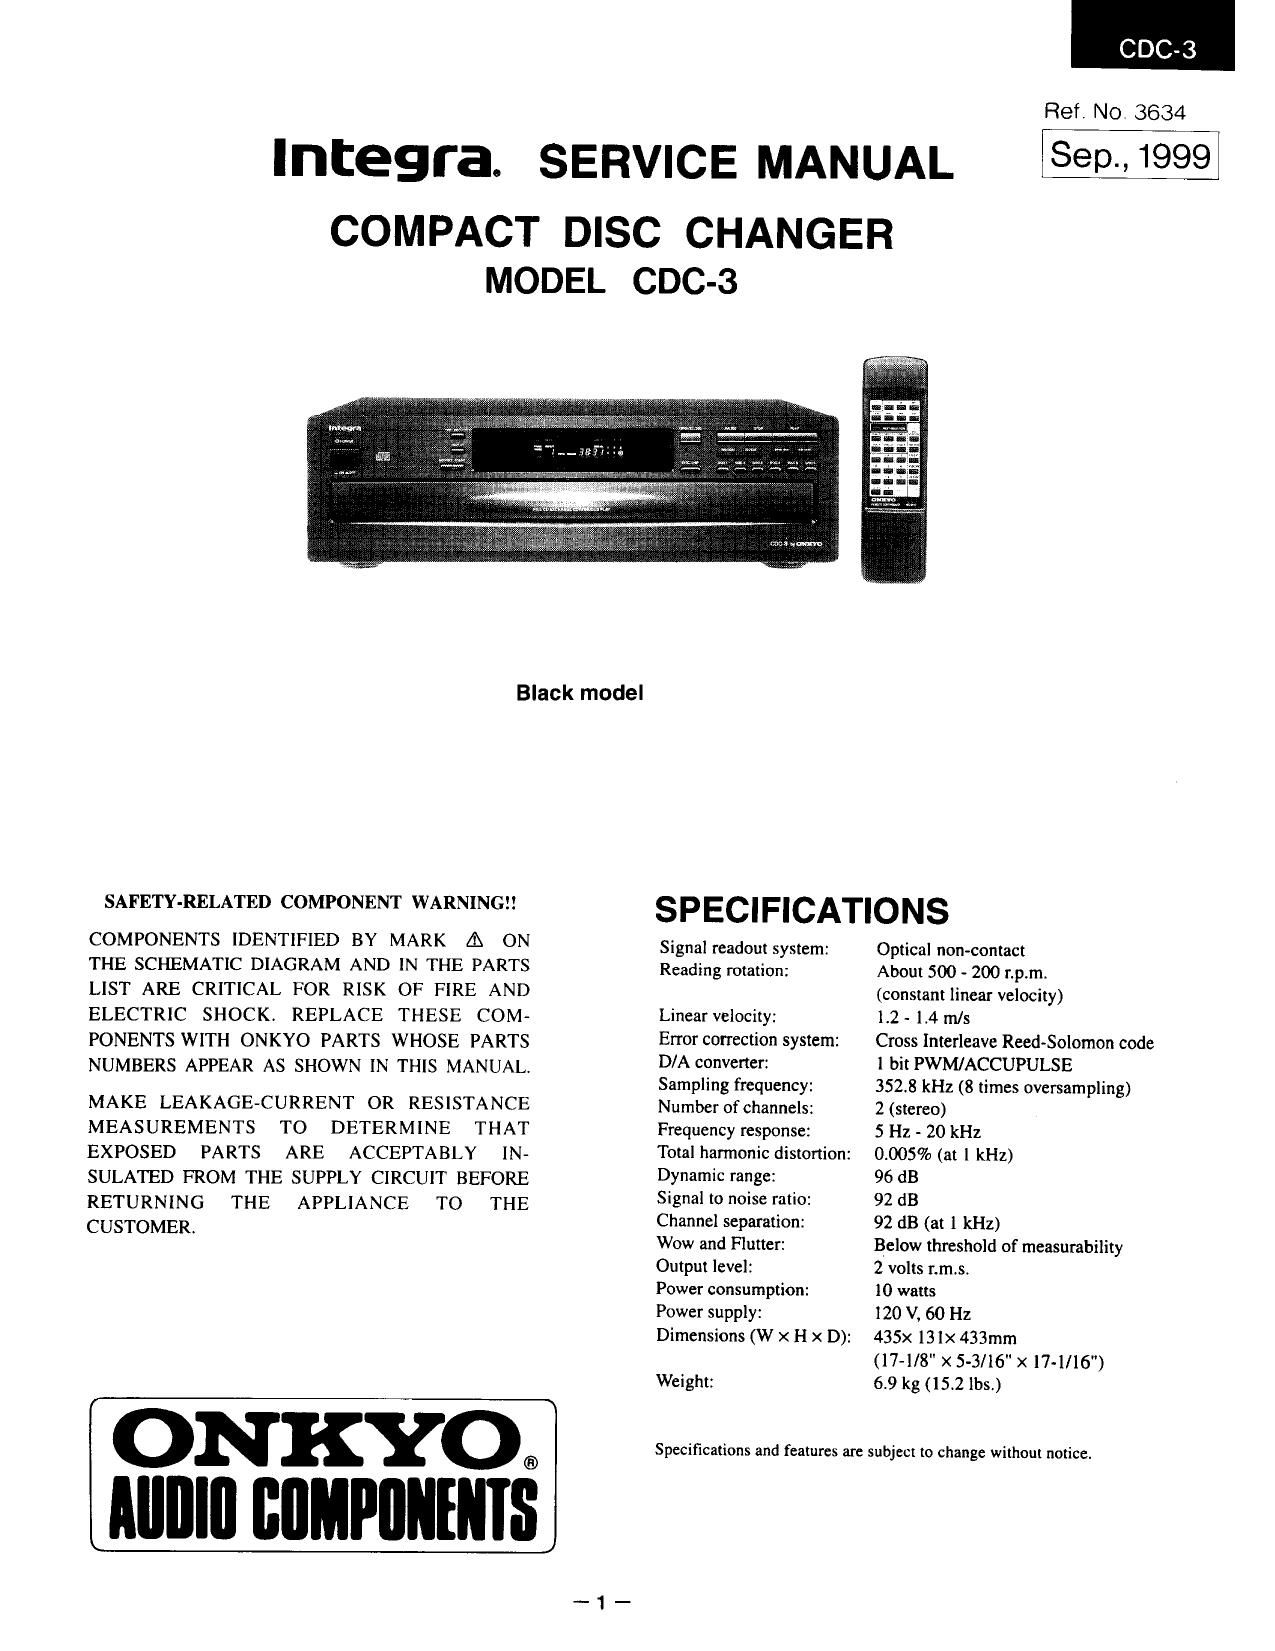 Onkyo Integra CDC 3 Service Manual